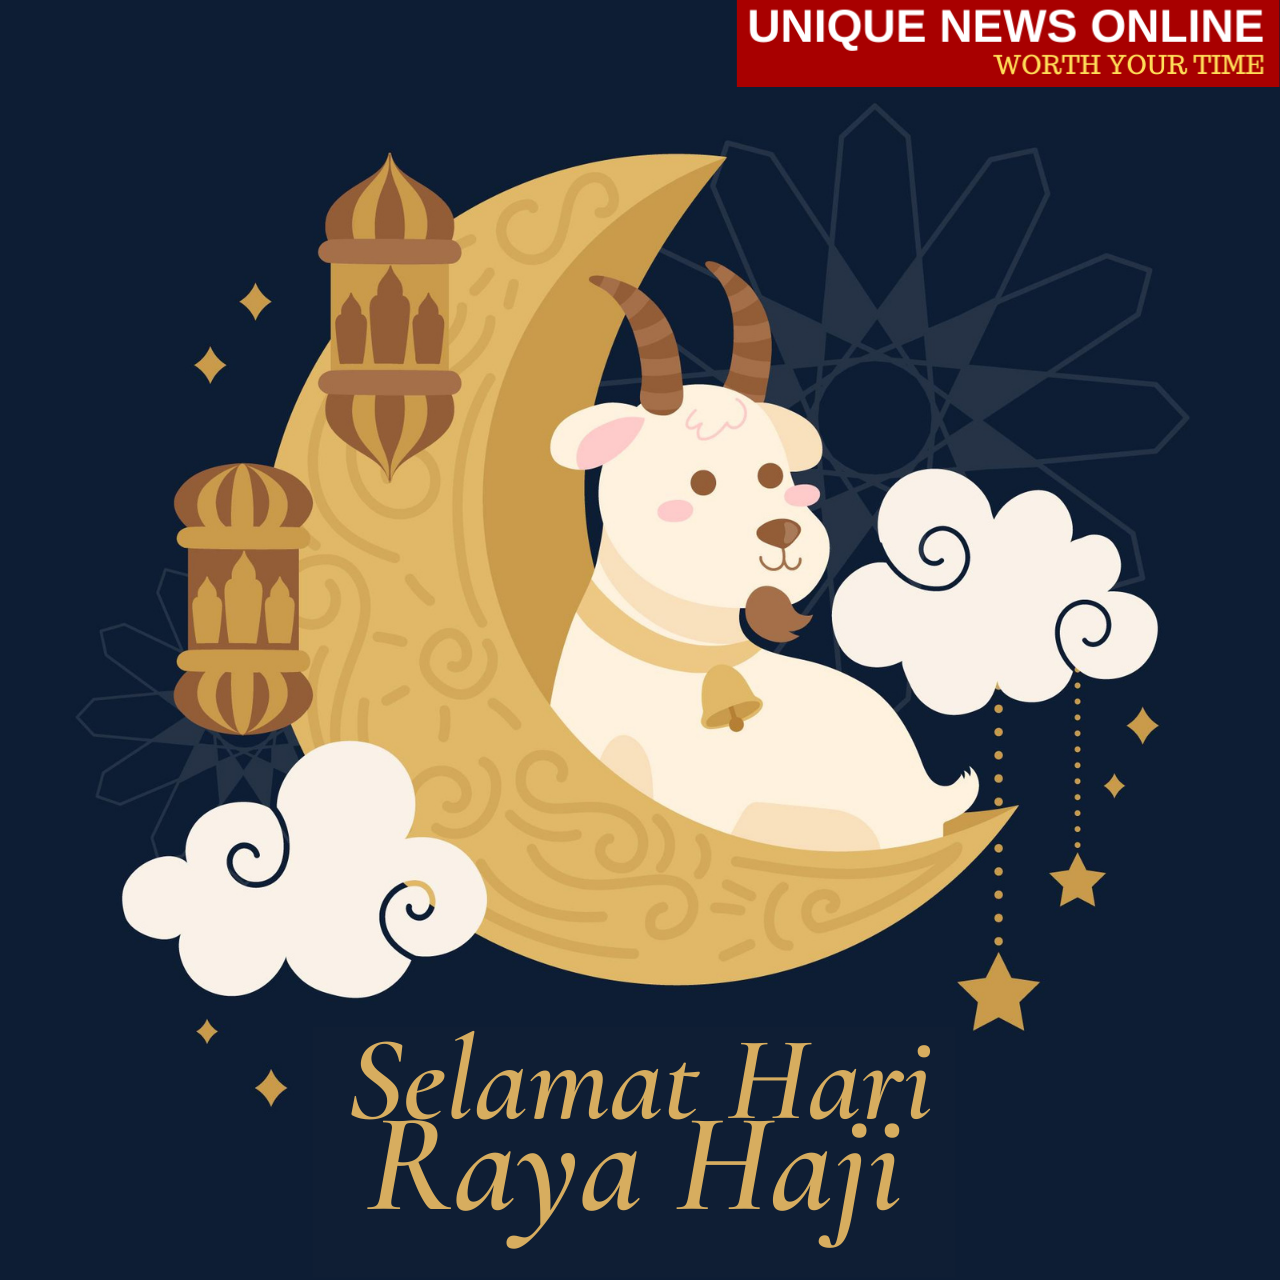 Saúdos de Hari Raya Haji 2021 e imaxes HD de Eid Al-Adha: Desexos de